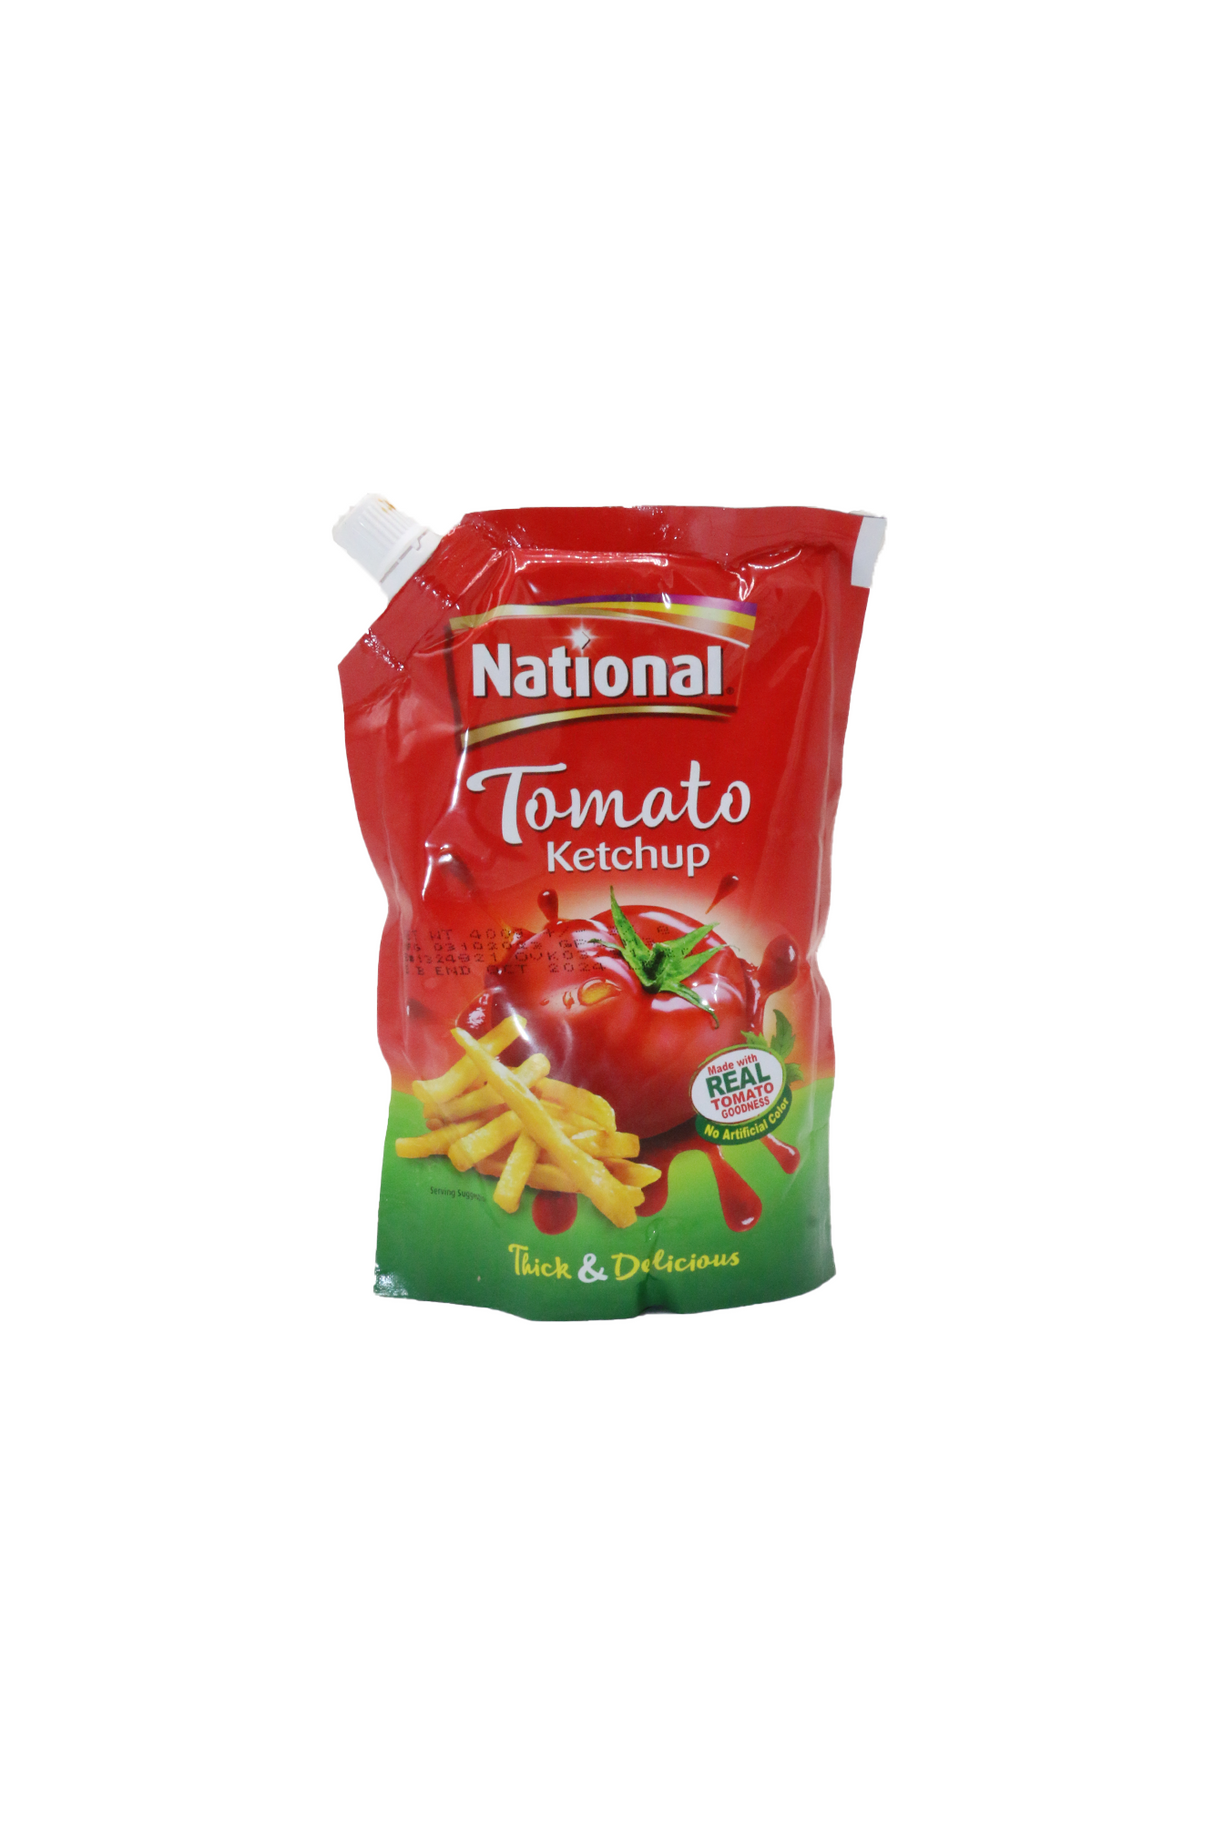 national ketchup tomato 400g